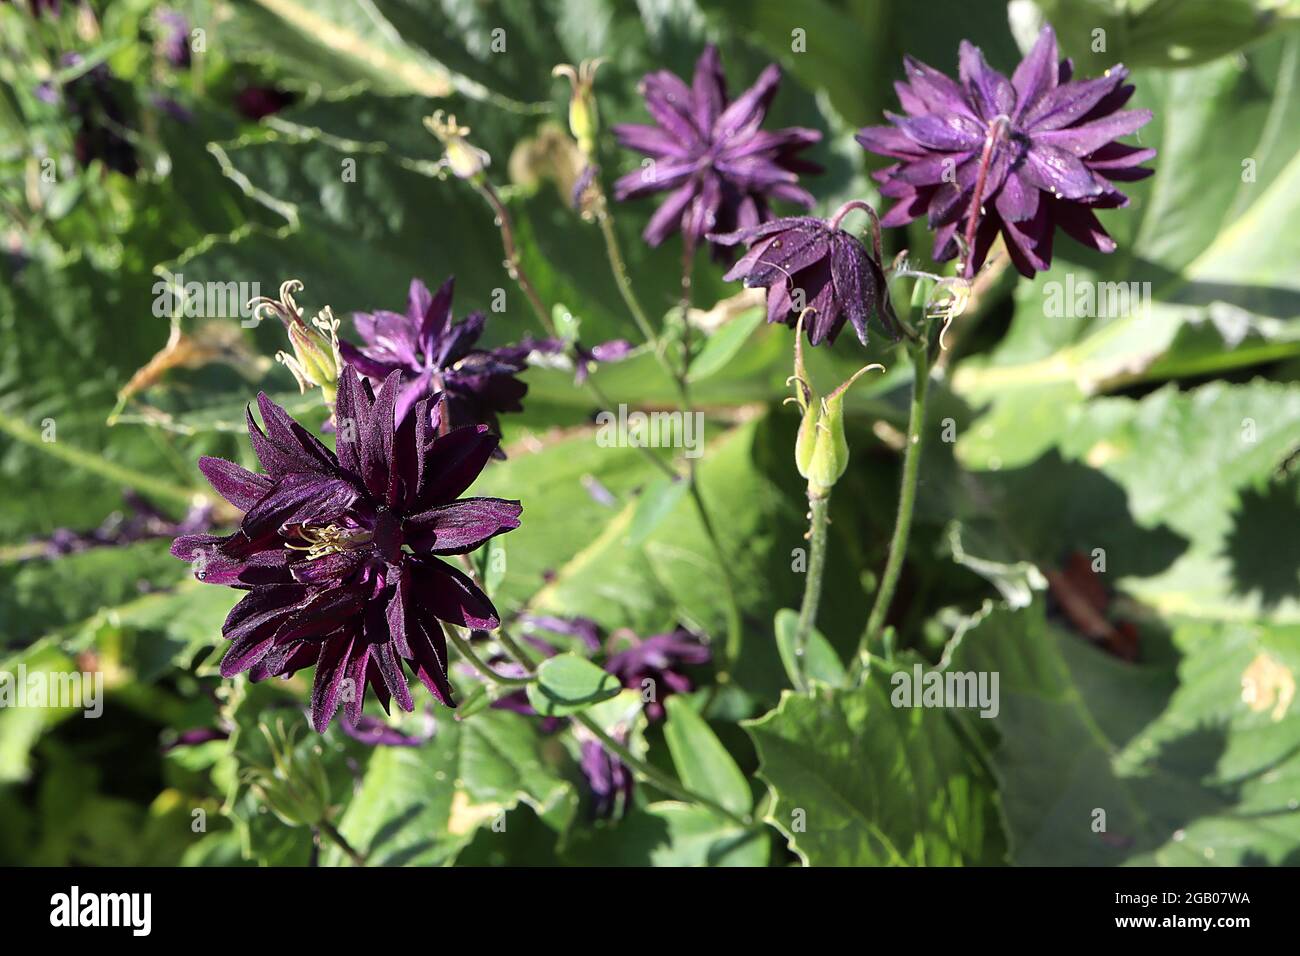 Aquilegia vulgaris var stellata ‘Black Barlow’ Columbine / Granny’s bonnet Black Barlow - spurless double deep purple flowers, June, England, UK Stock Photo